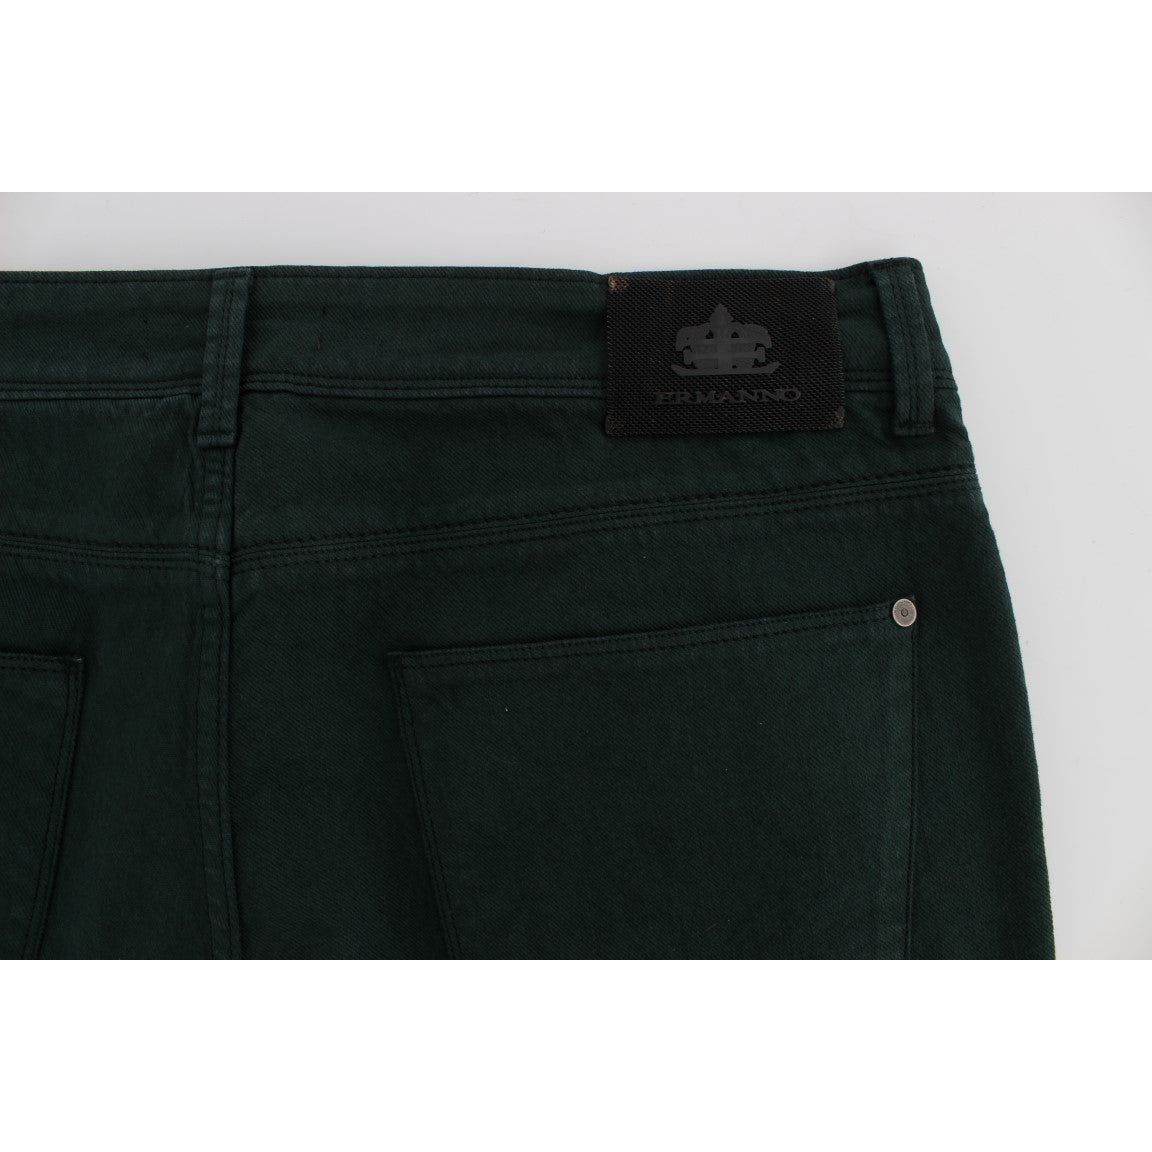 Ermanno Scervino Chic Green Straight Cut Jeans green-cotton-denim-stretch-straight-fit-jeans 299691-green-cotton-denim-stretch-straight-fit-jeans-6.jpg